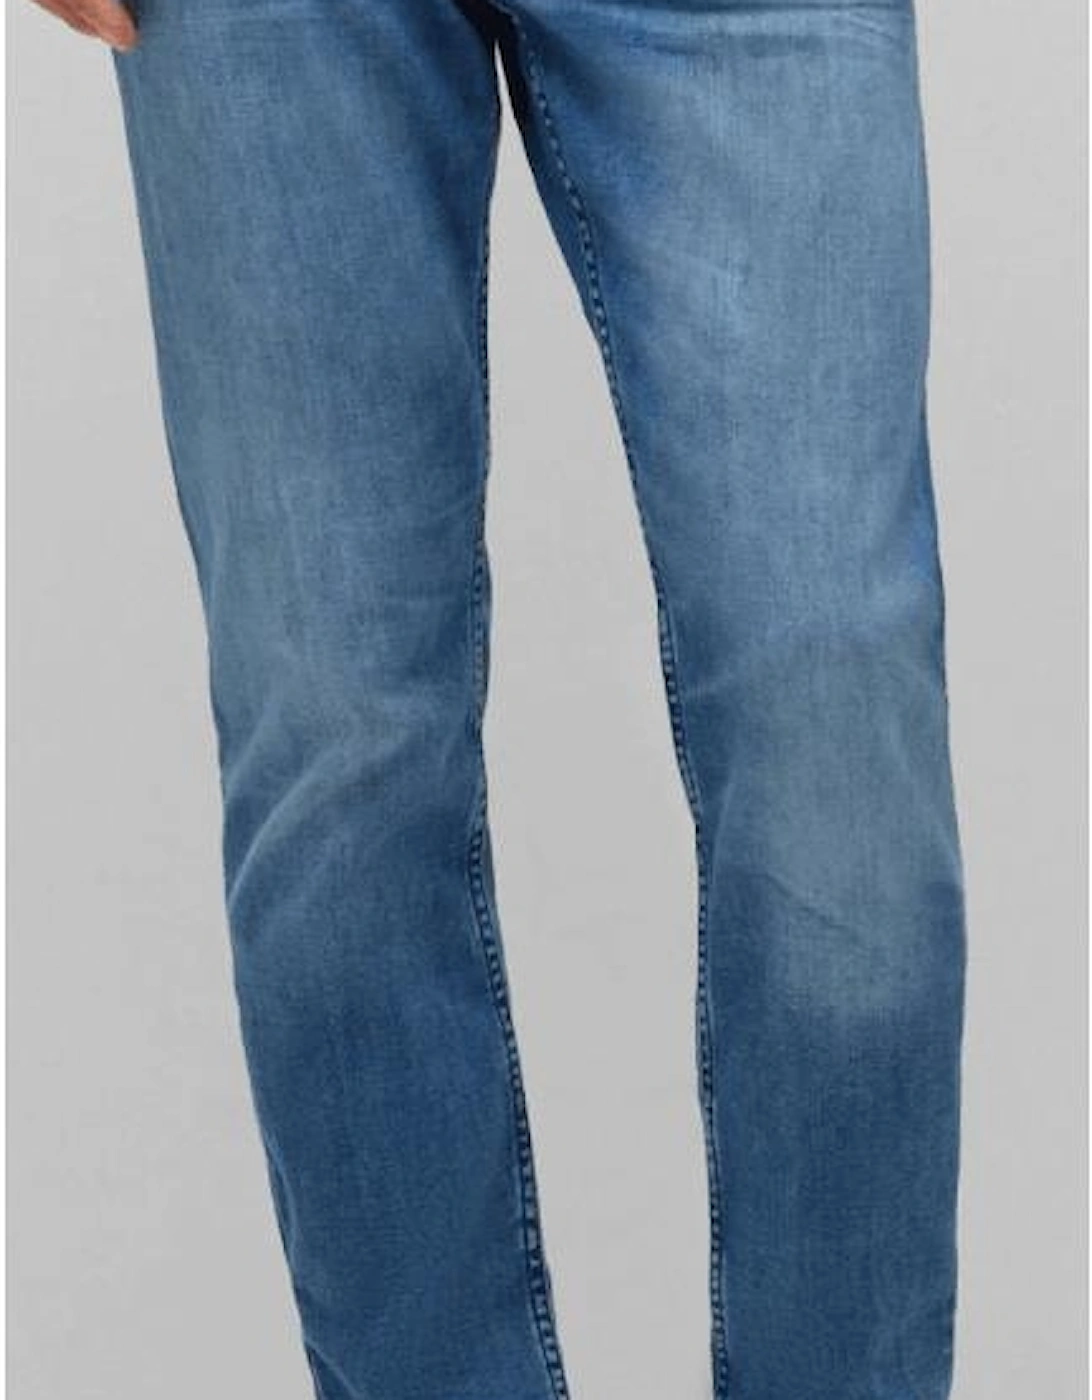 Delano-200 Slim Tapered Fit Light Wash Blue Jeans